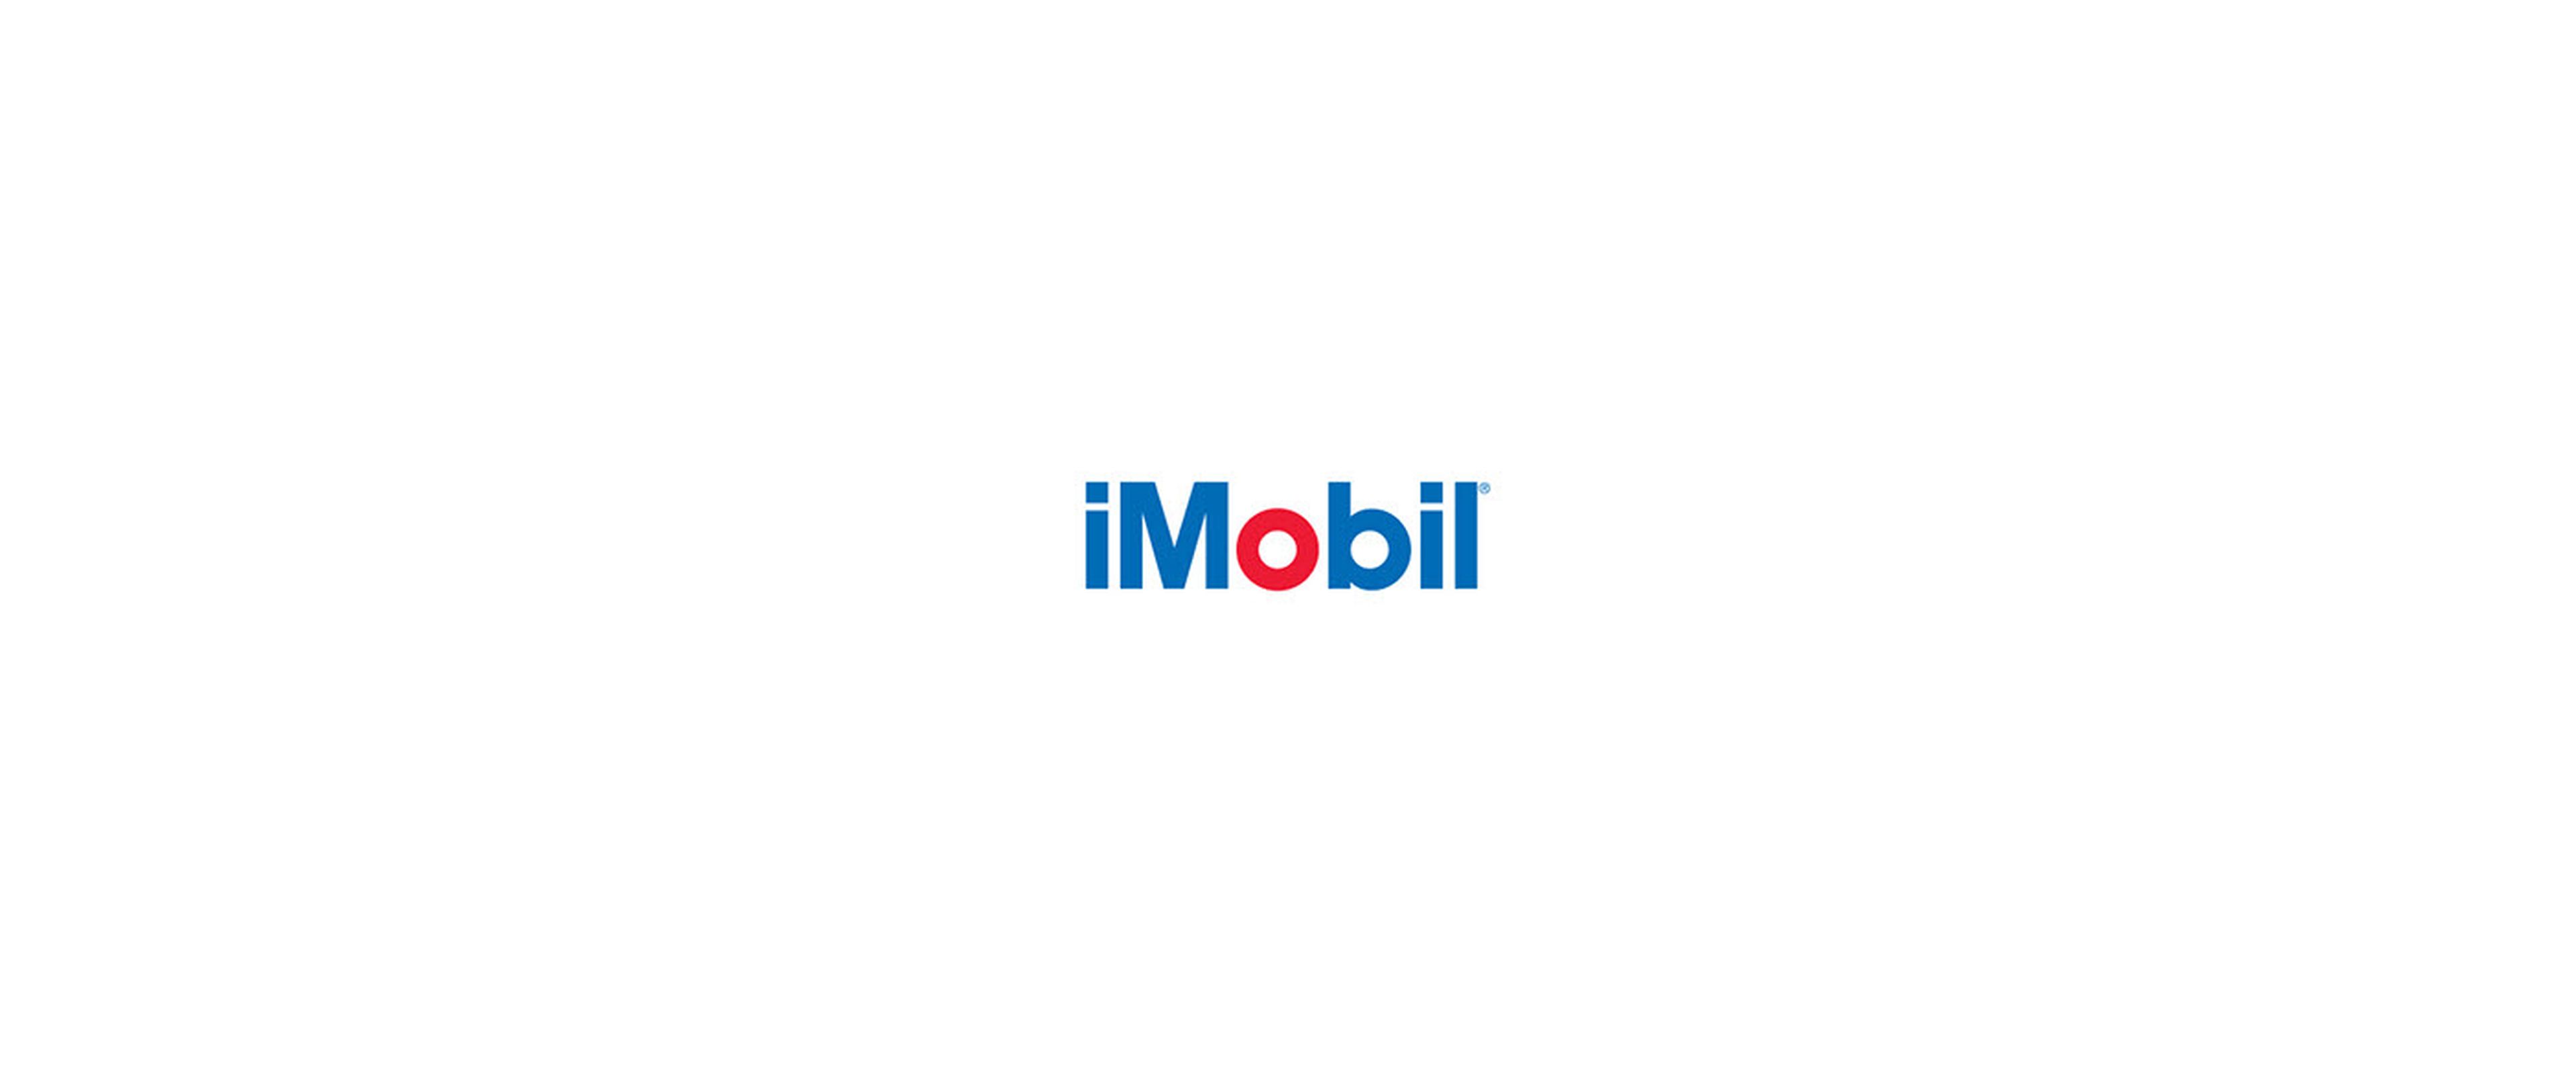 Logo de Mobil diseñado por Jure Tovrljan.